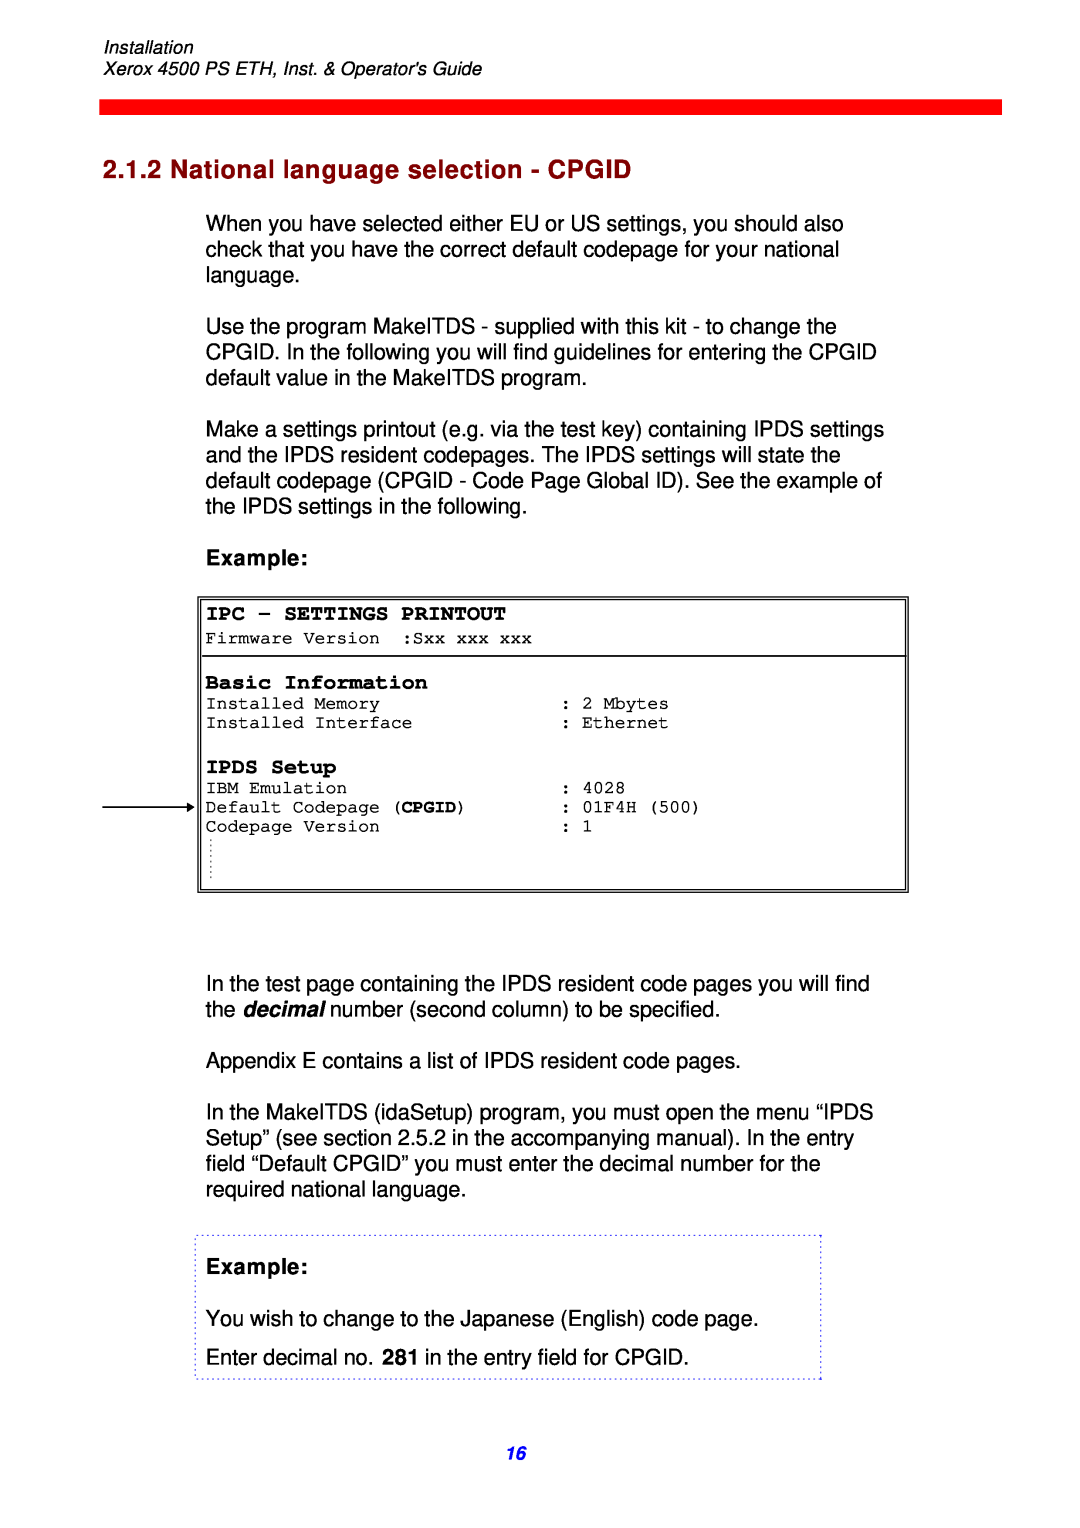 Xerox 4500 ps eth National language selection - CPGID, Example, Ipc - Settings Printout, Basic Information, IPDS Setup 